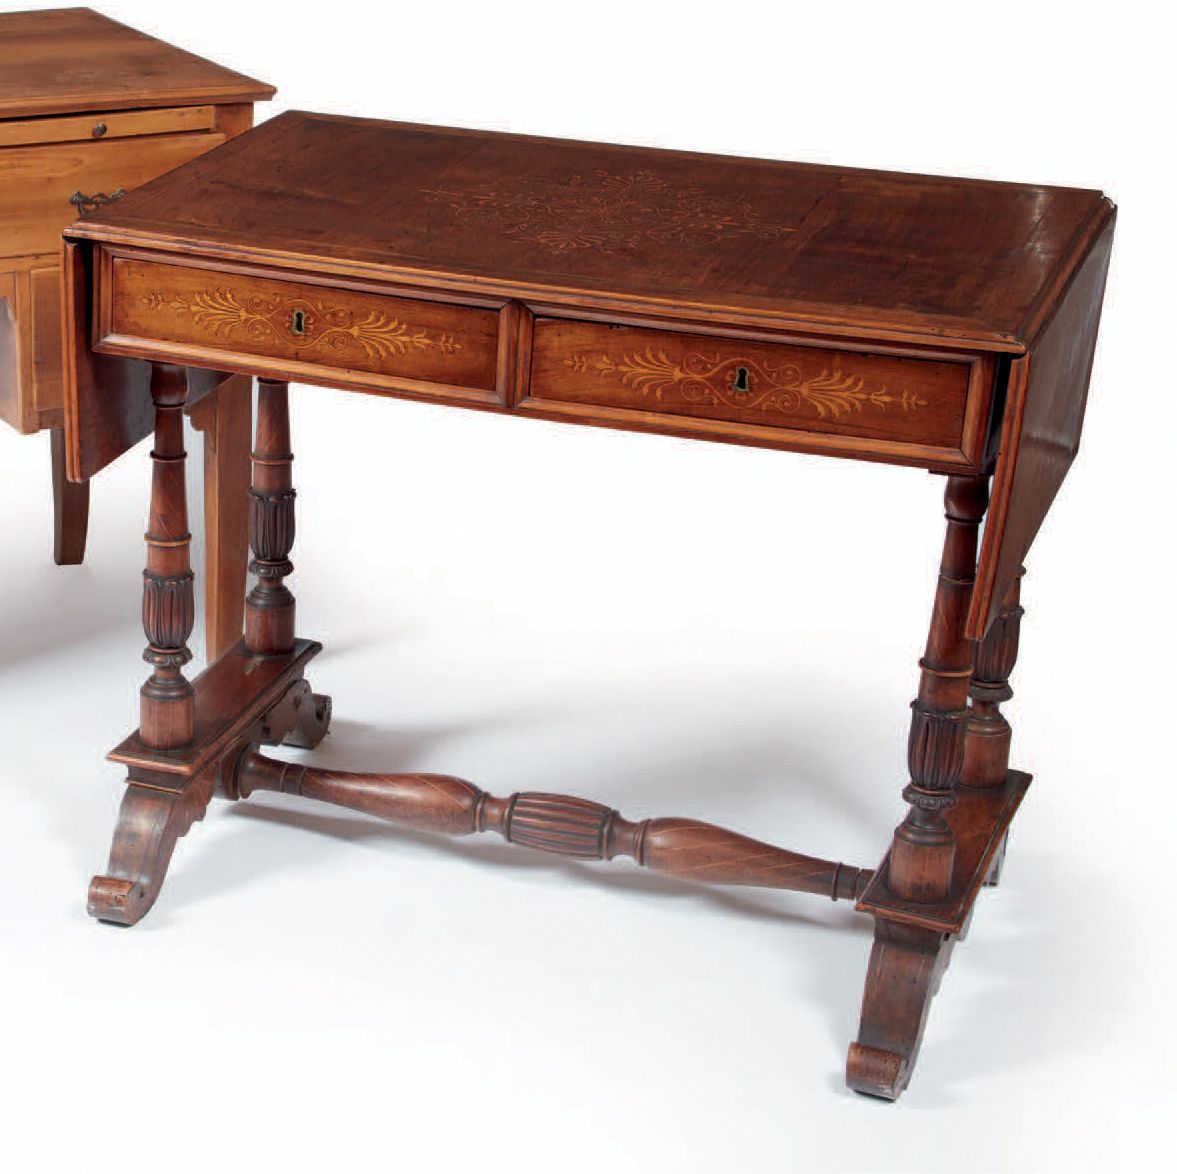 Null 镶嵌木桌，正面有两个抽屉，两个折叠侧翼，四条腿由横杆连接，意大利，约1830-1840年（磨损）
Table en bois marqueté, de&hellip;